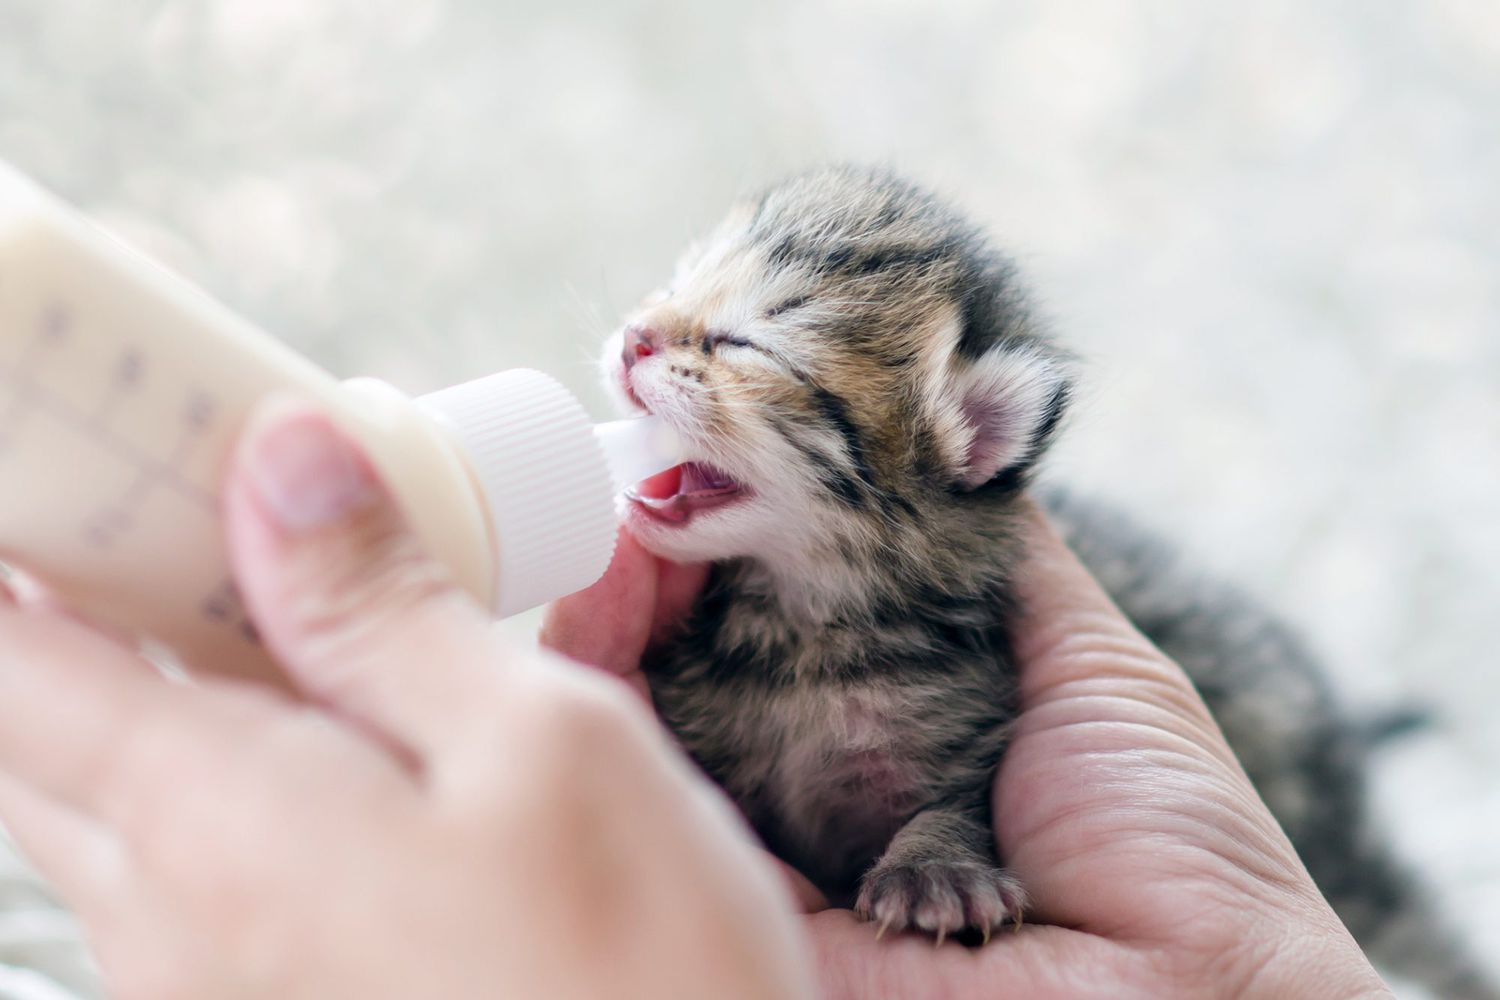 what do newborn kittens eat